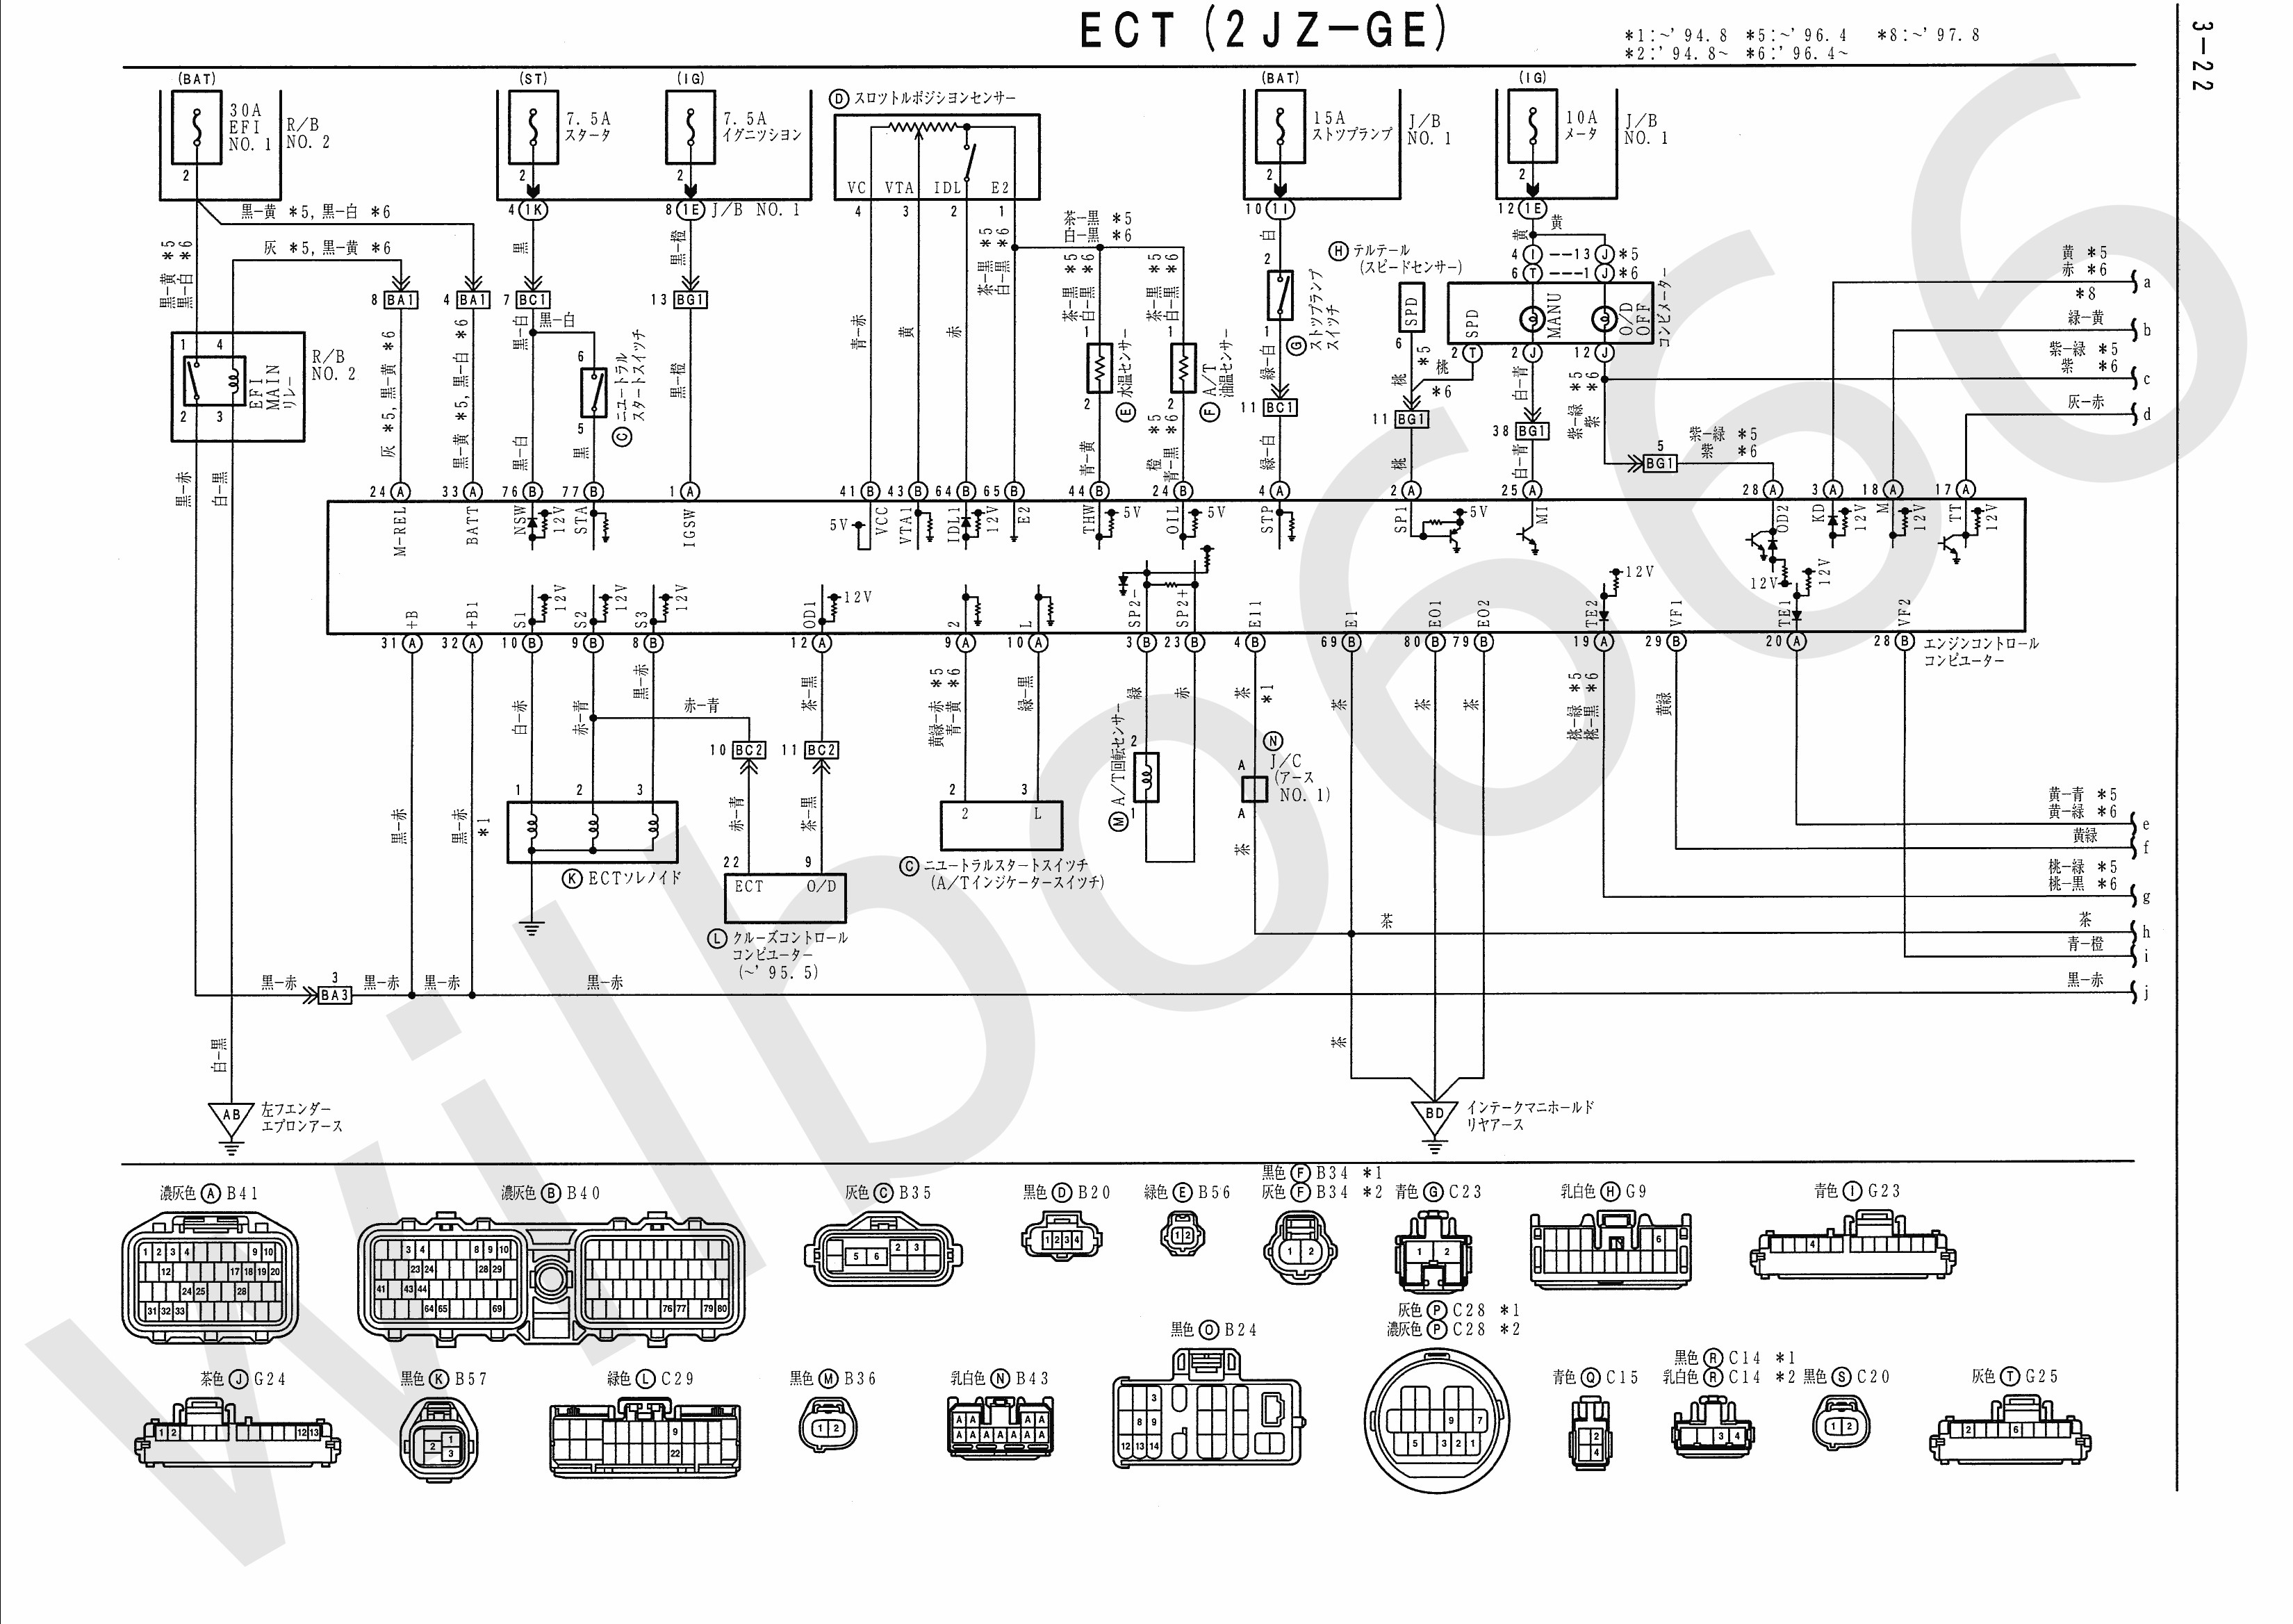 Engine Coolant Temperature Sensor Wiring Diagram Wilbo666 2jz Ge Jza80 Supra Engine Wiring Of Engine Coolant Temperature Sensor Wiring Diagram